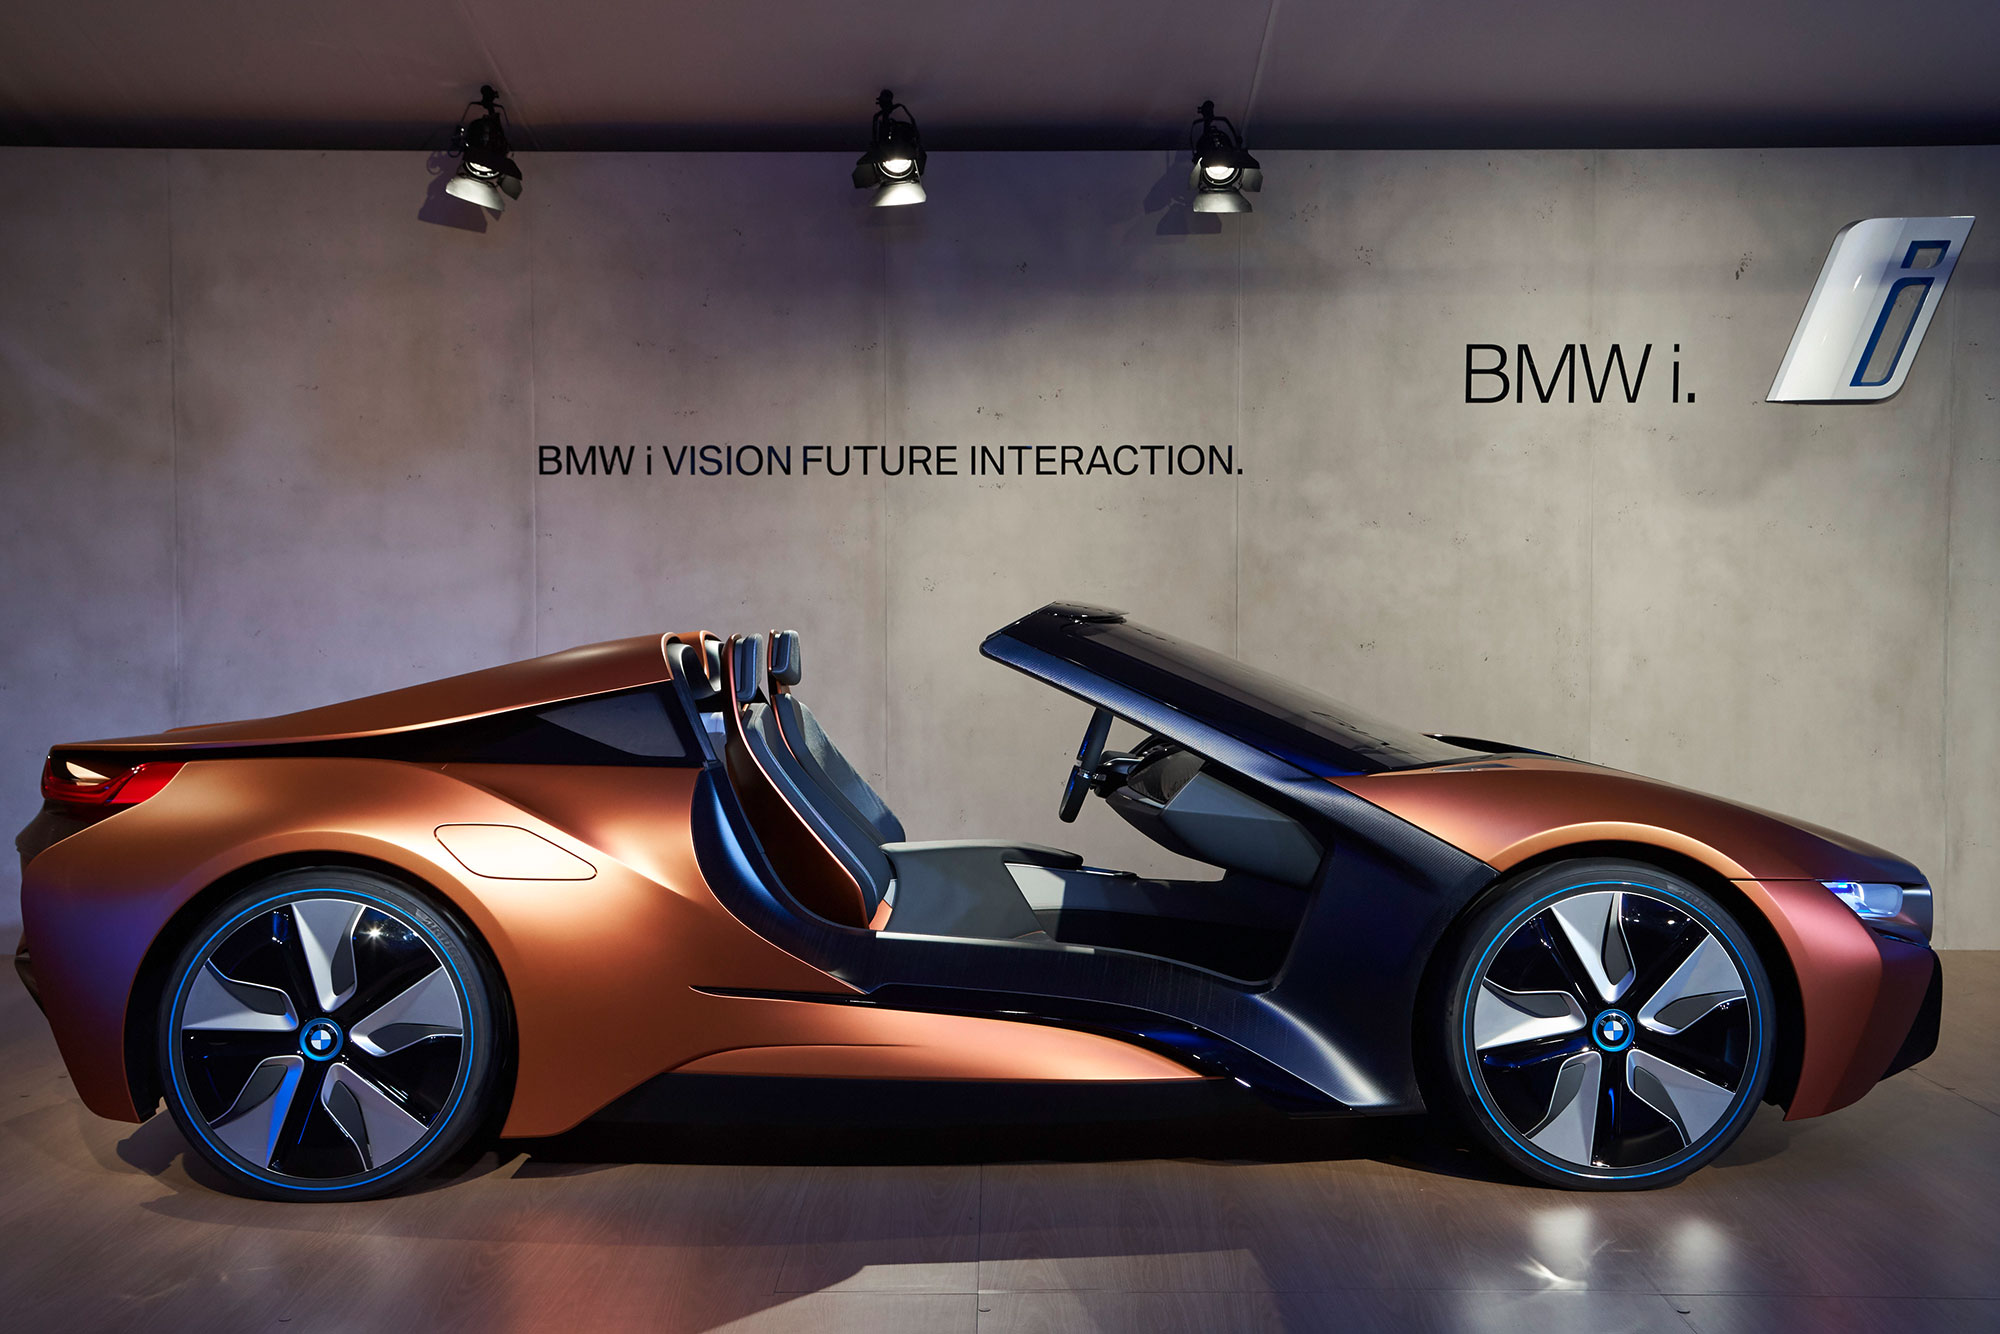 Handson with BMW selfdriving concept car BimmerLife